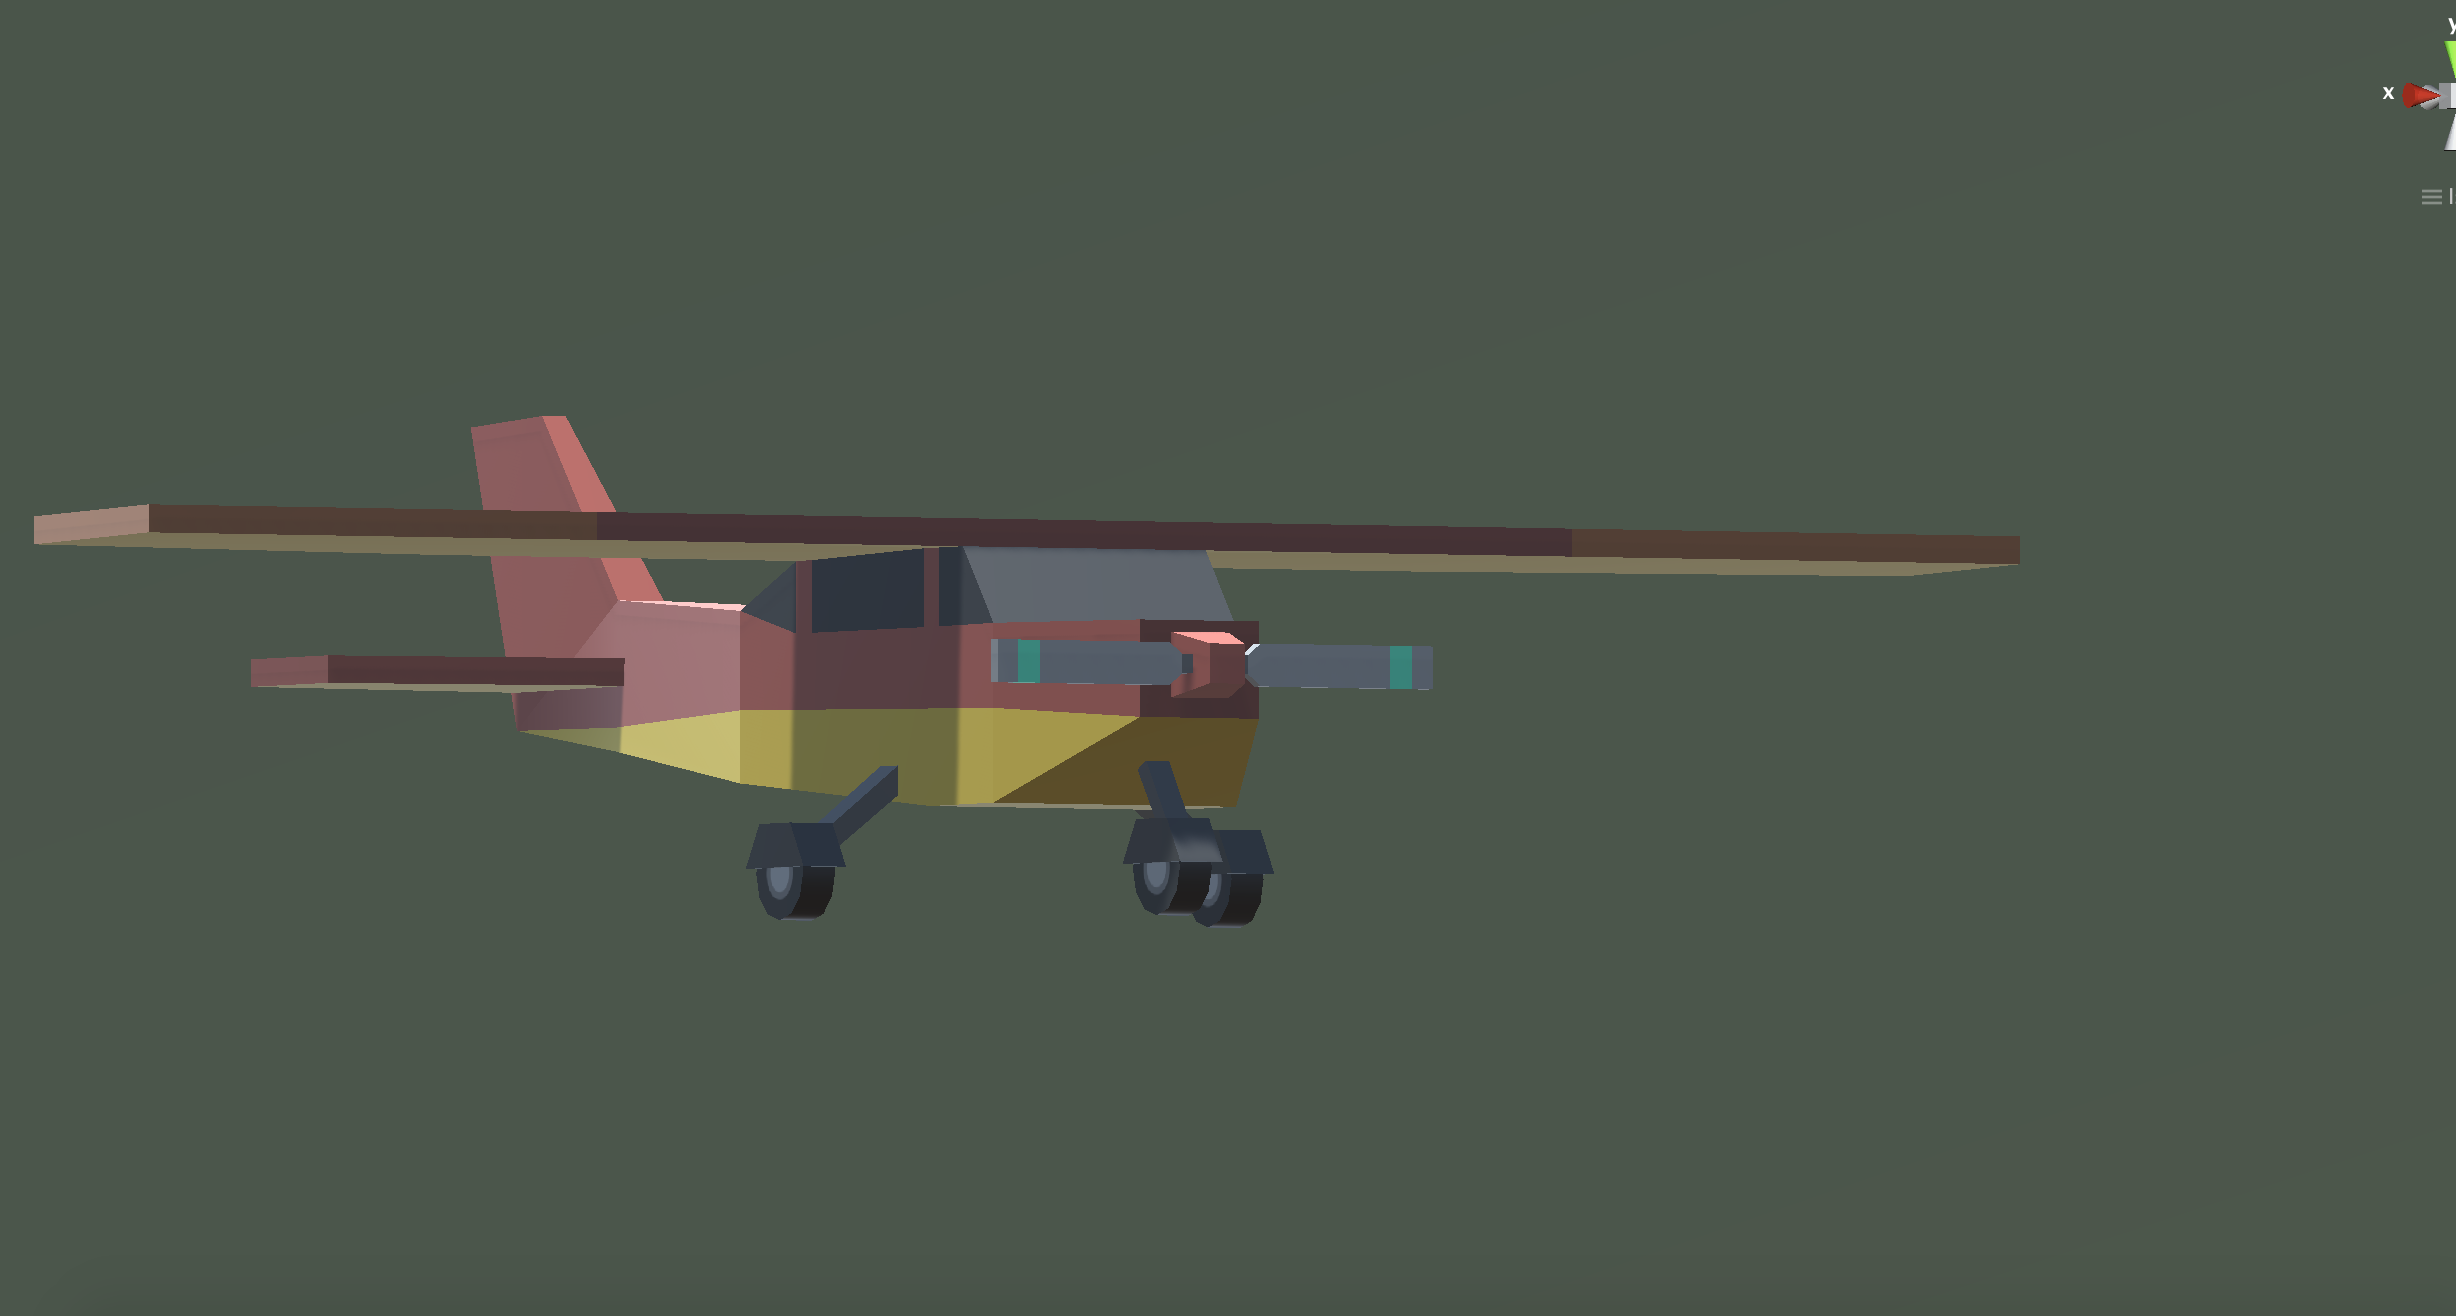 Syd's Plane Programming